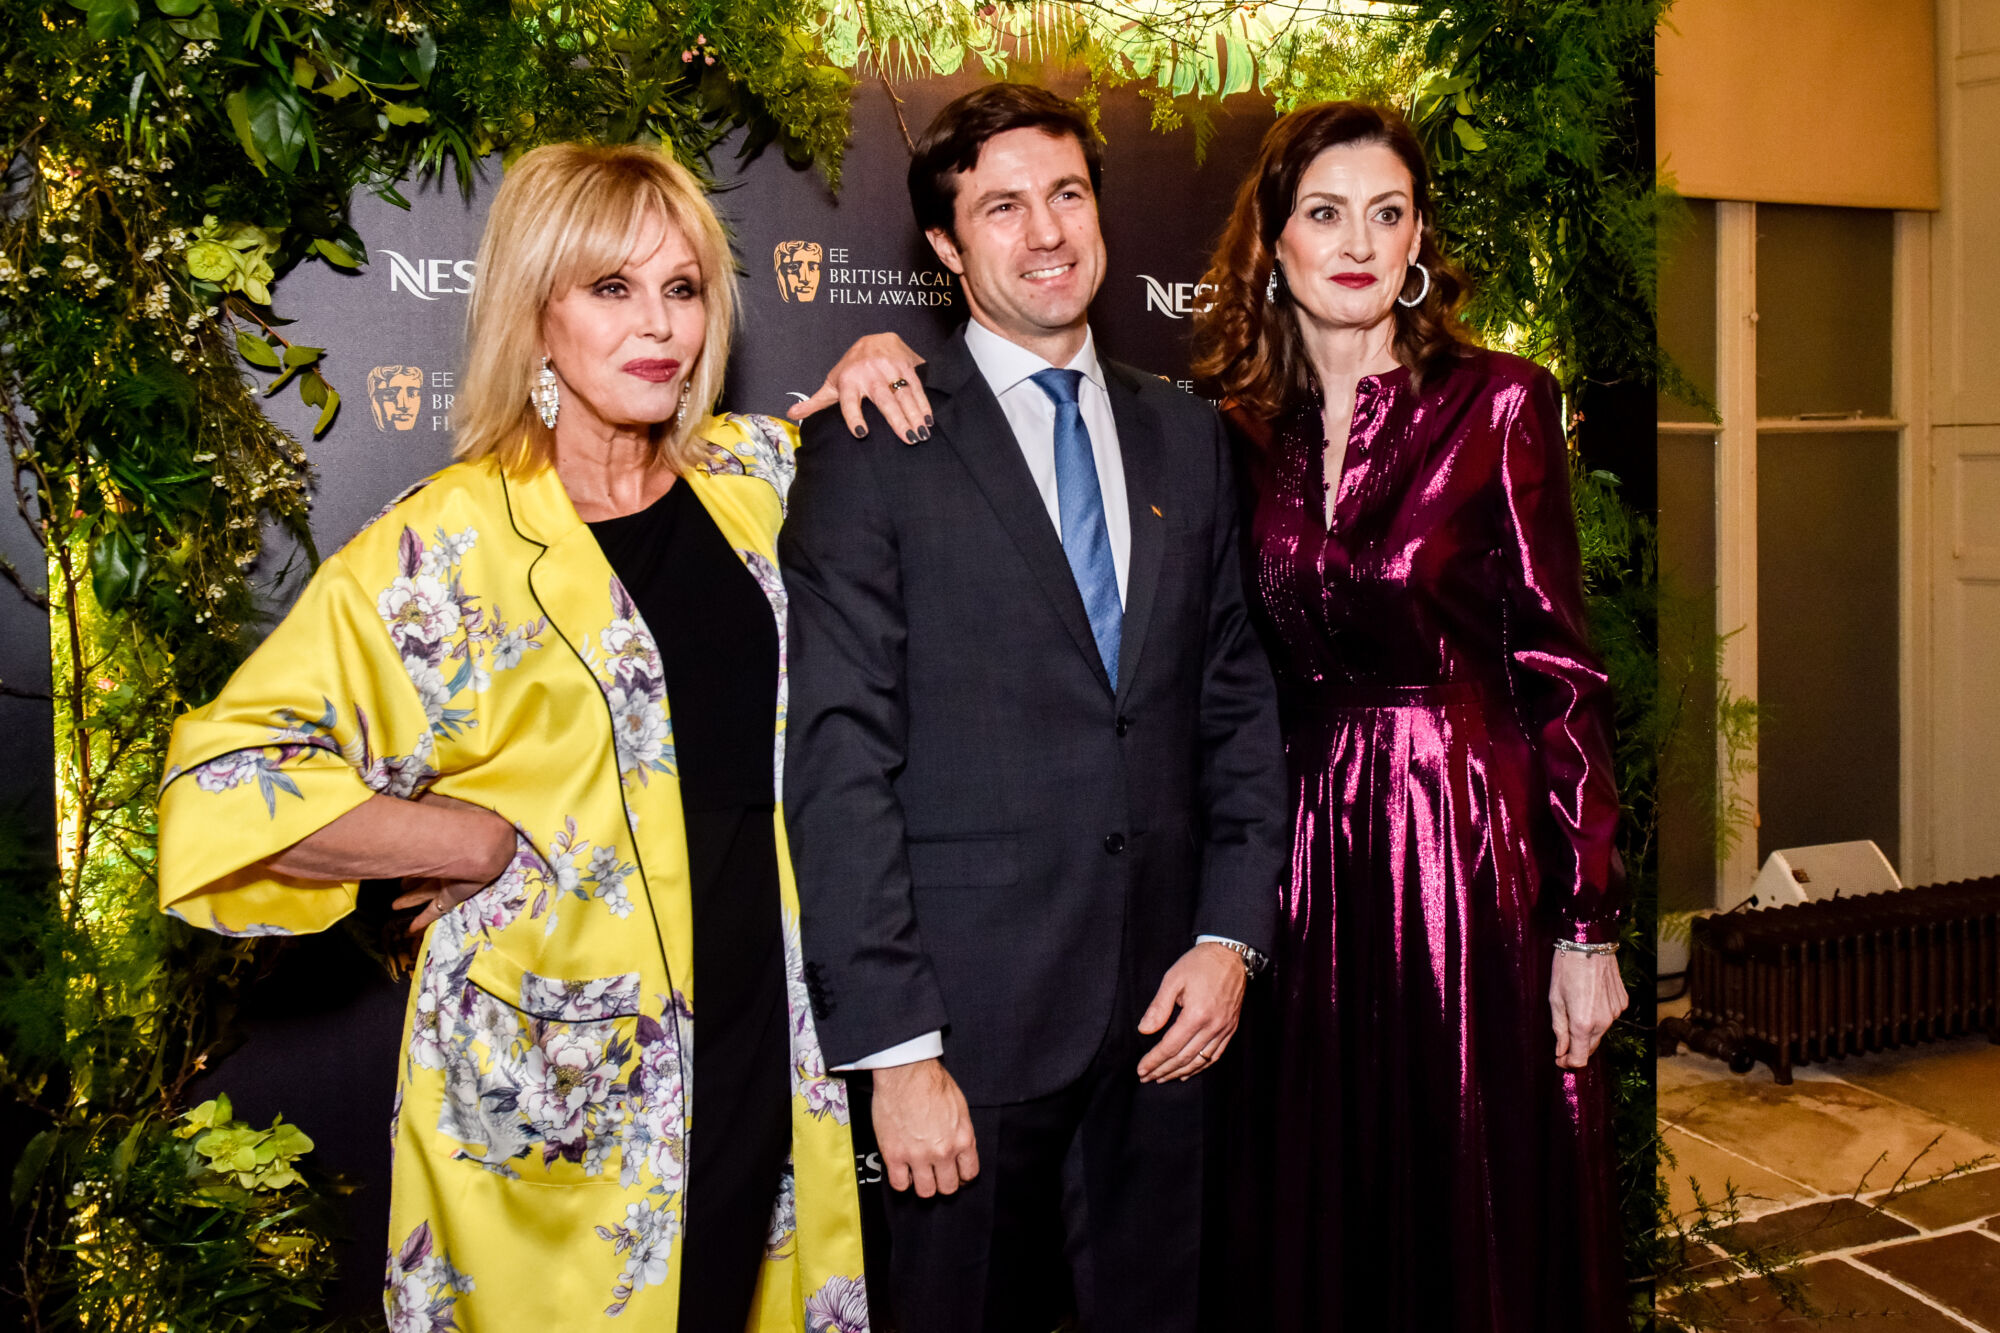 The Wick - Francisco Nogueira (Managing Director UK, Nespresso), Amanda Berry (BAFTA Chief Executive) with Joanna Lumley (Host),

Courtesy of BAFTA